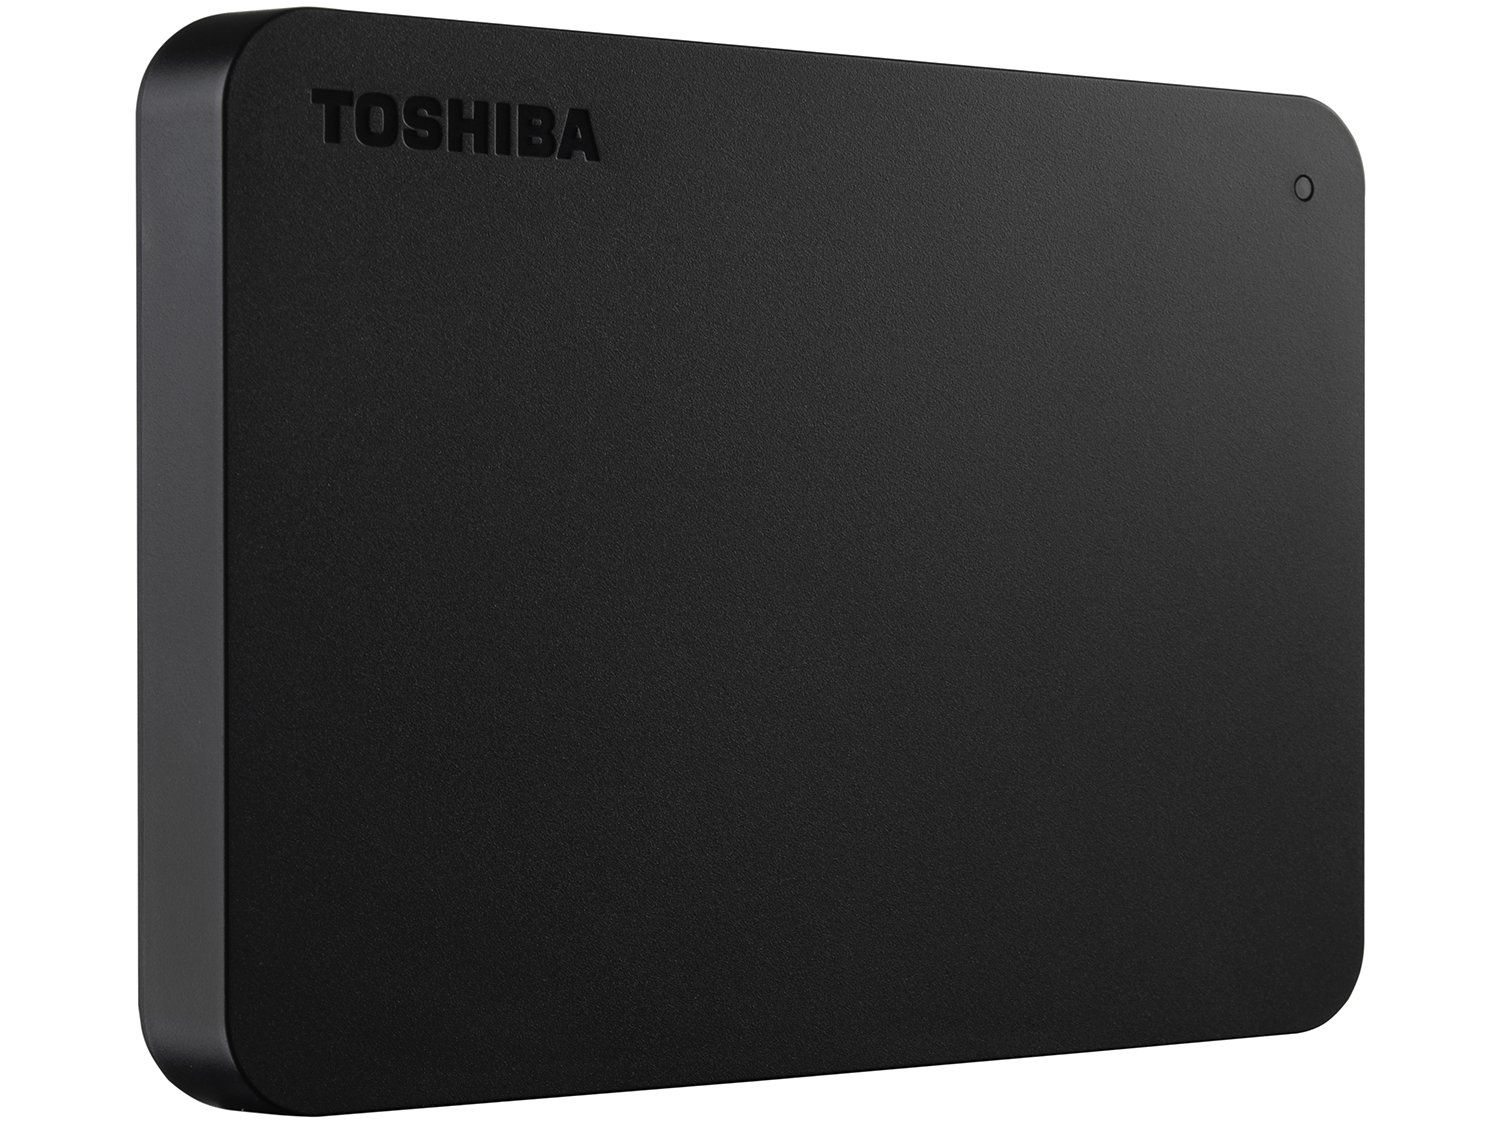 HD Externo Portátil Toshiba Canvio Basics, 1TB, USB 3.0, Preto - HDTB410XK3AA